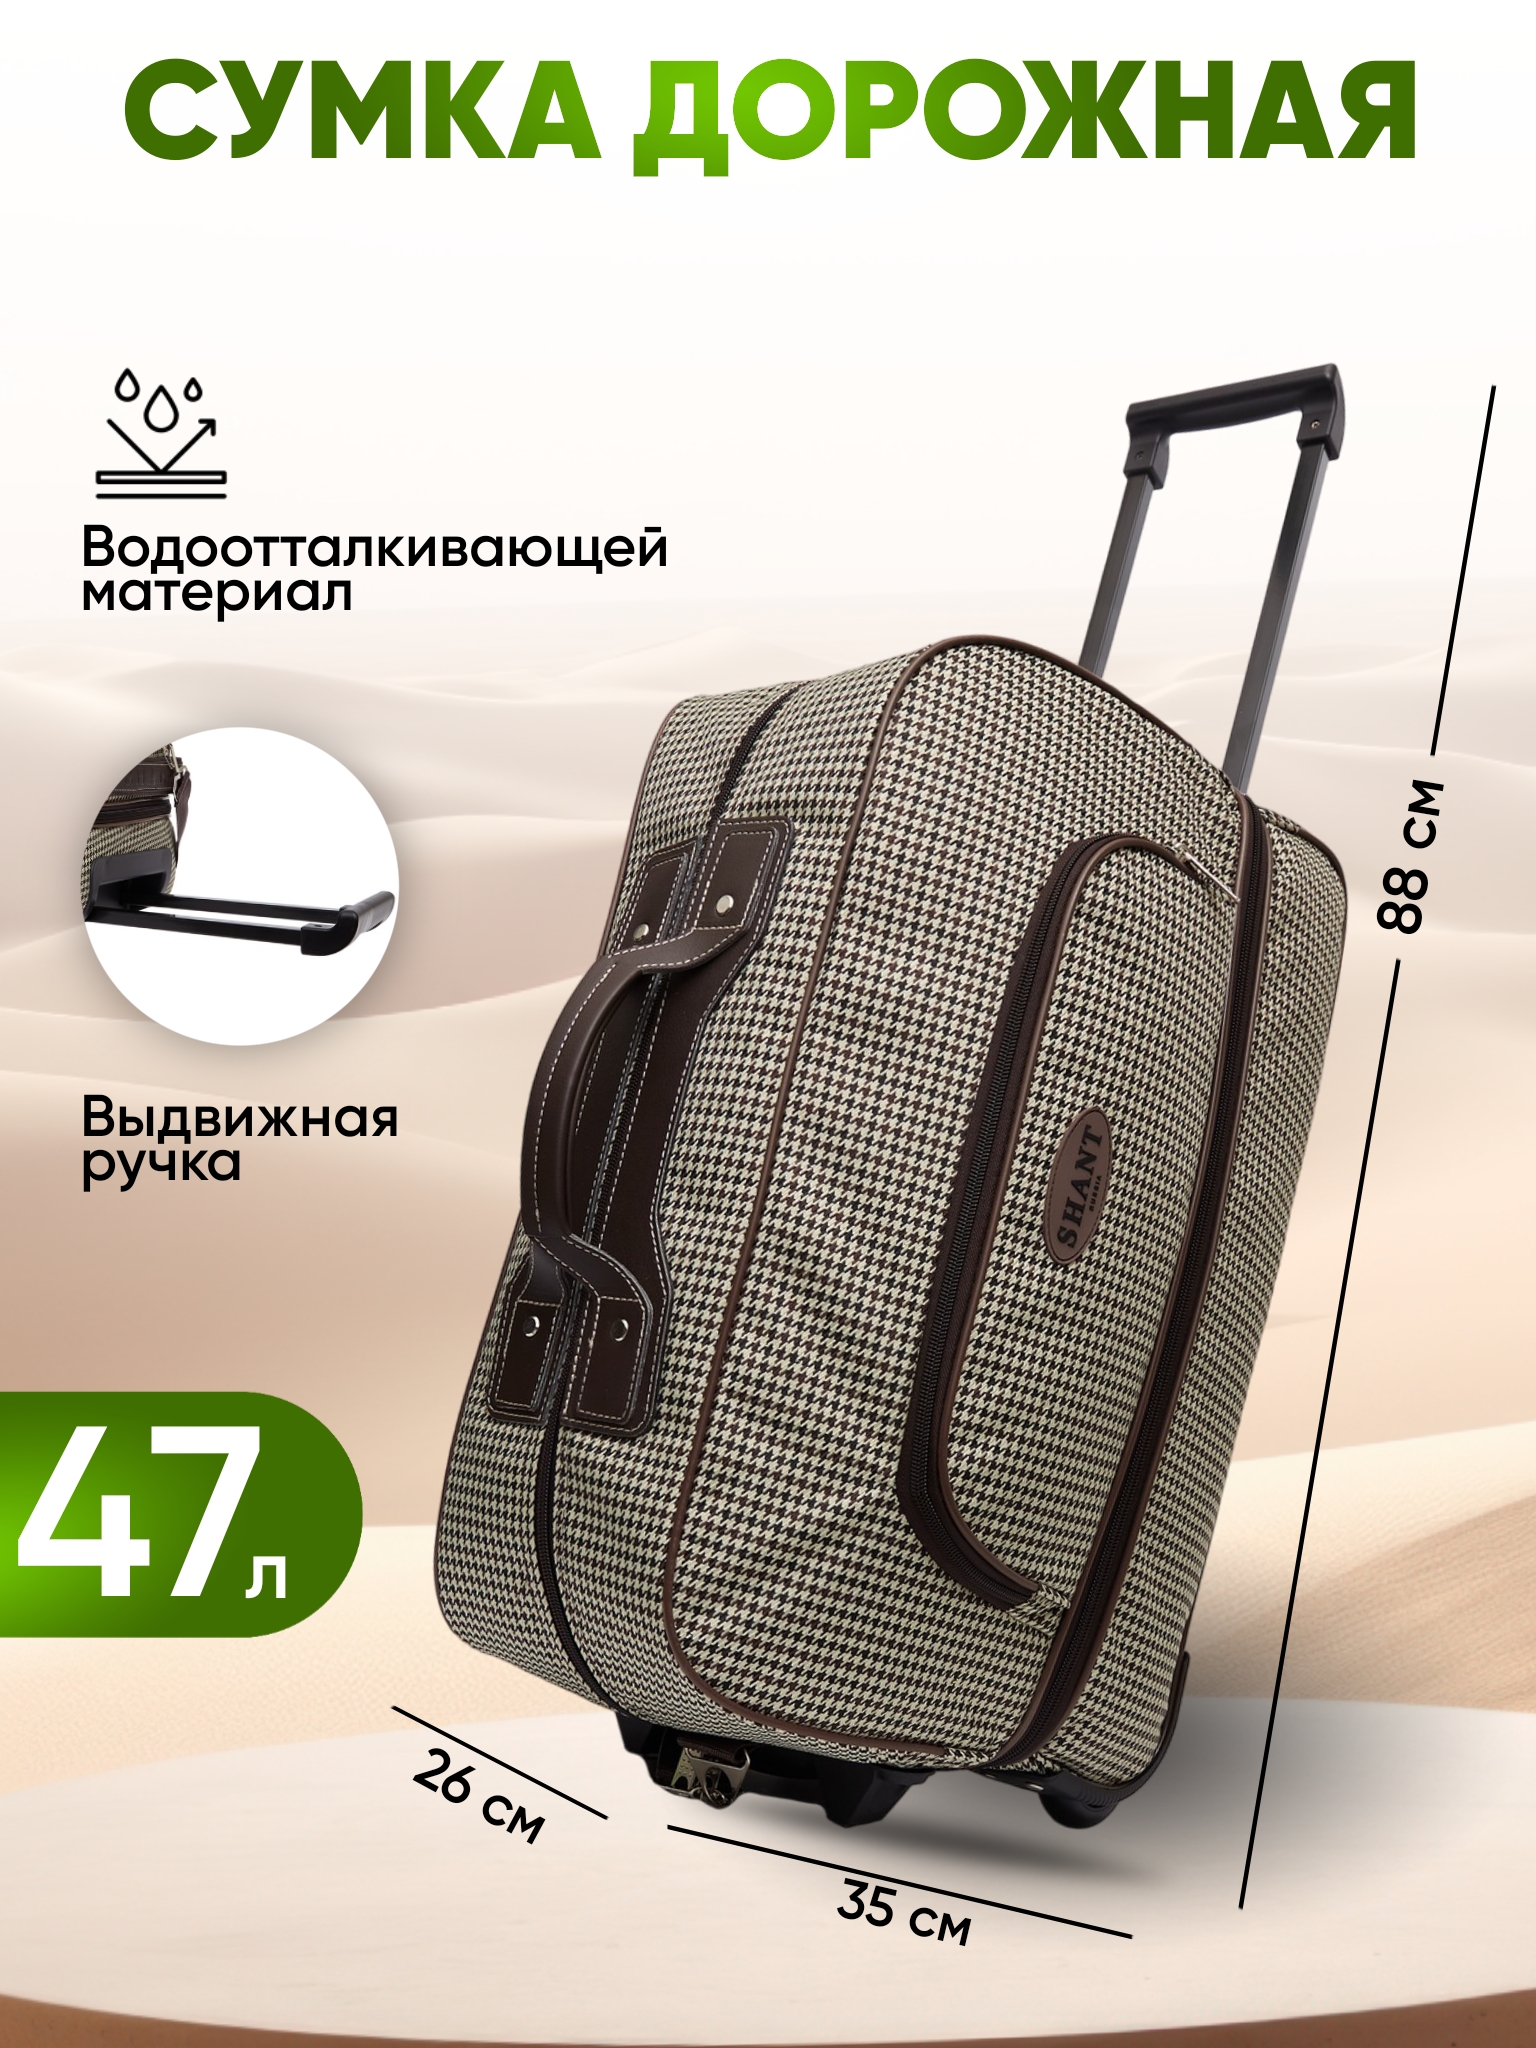 Сумка хозяйственная на колесах BAGS-ART - SHANT тканевая, трансформер для отдыха и в багаж